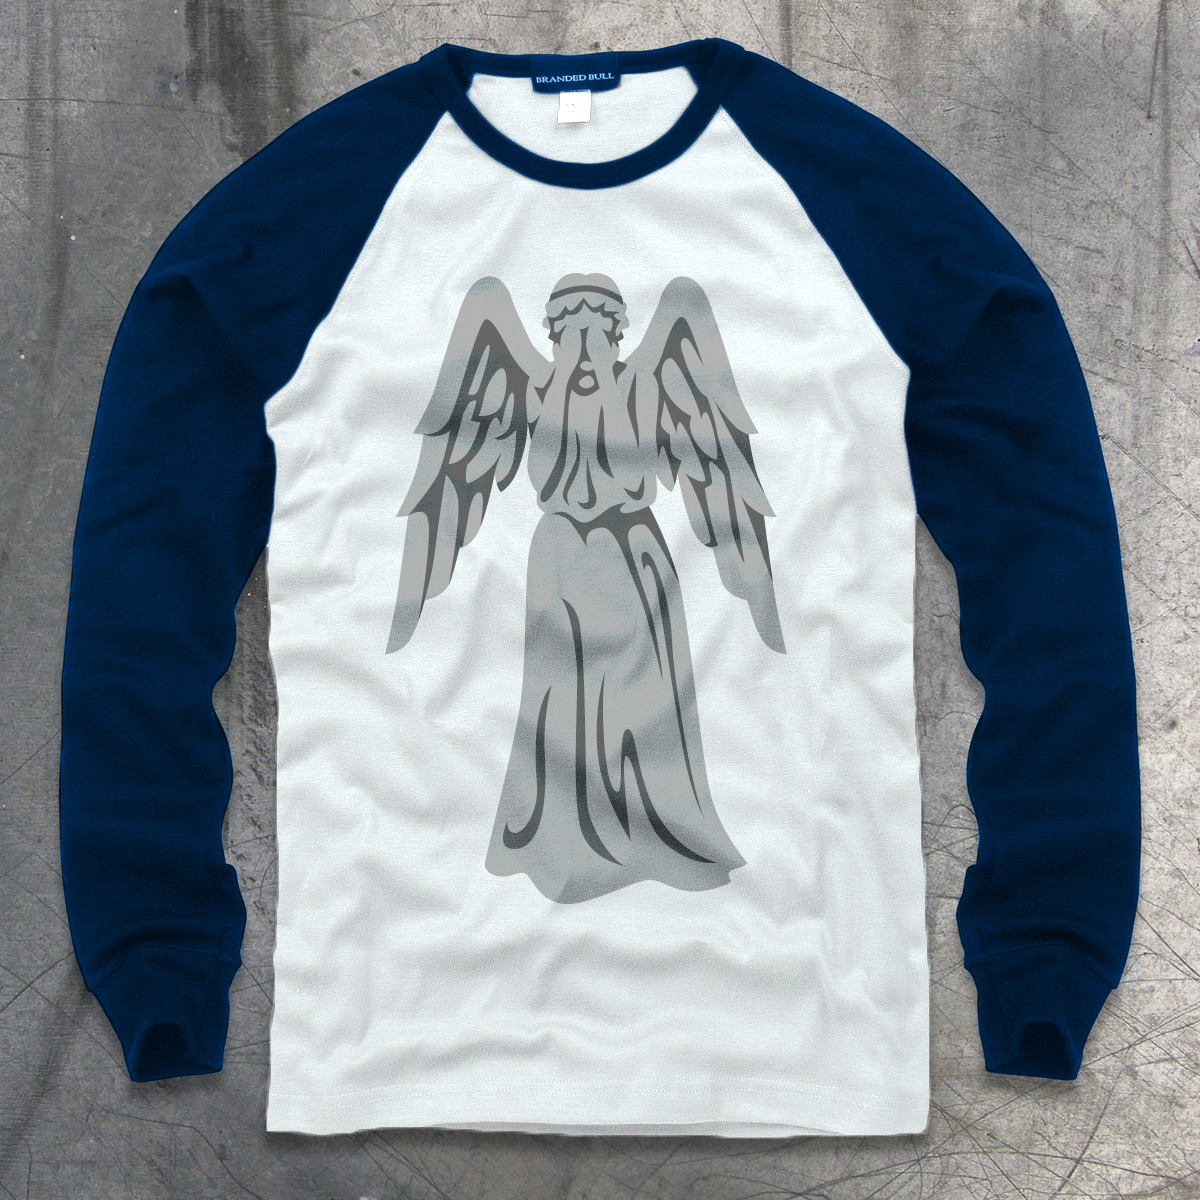 Weeping angel design